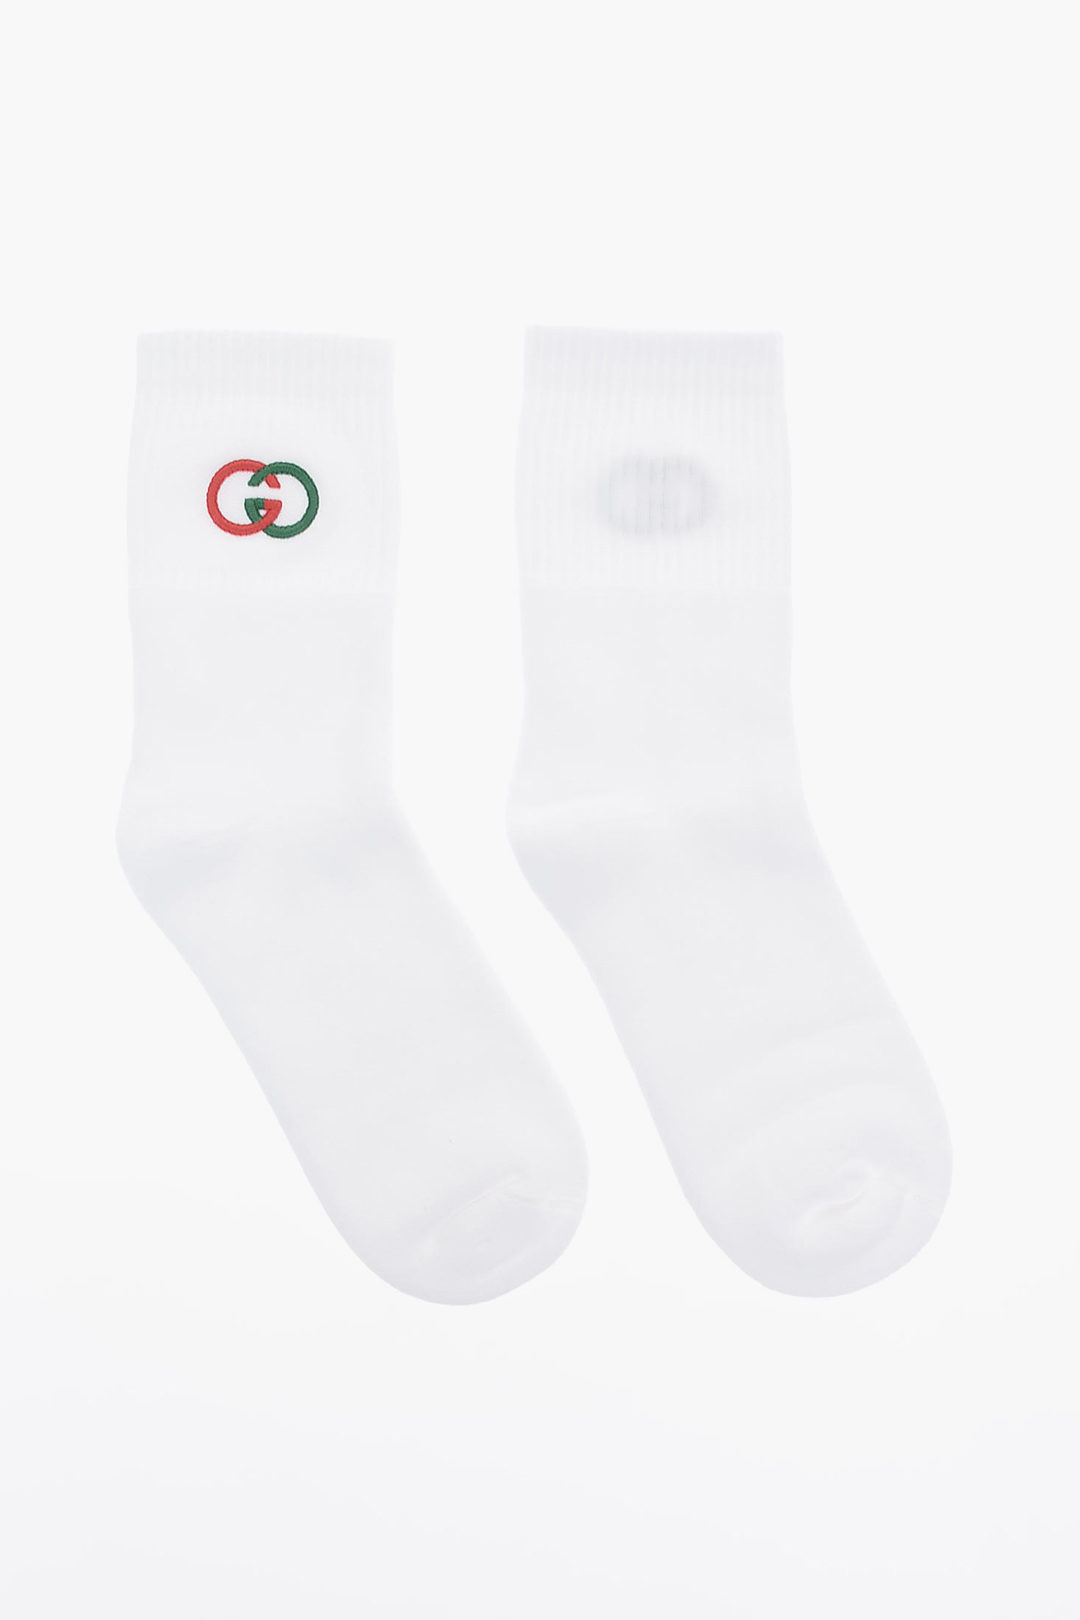 træ Identificere overtro Gucci Logo Embroidered Sock unisex men women - Glamood Outlet